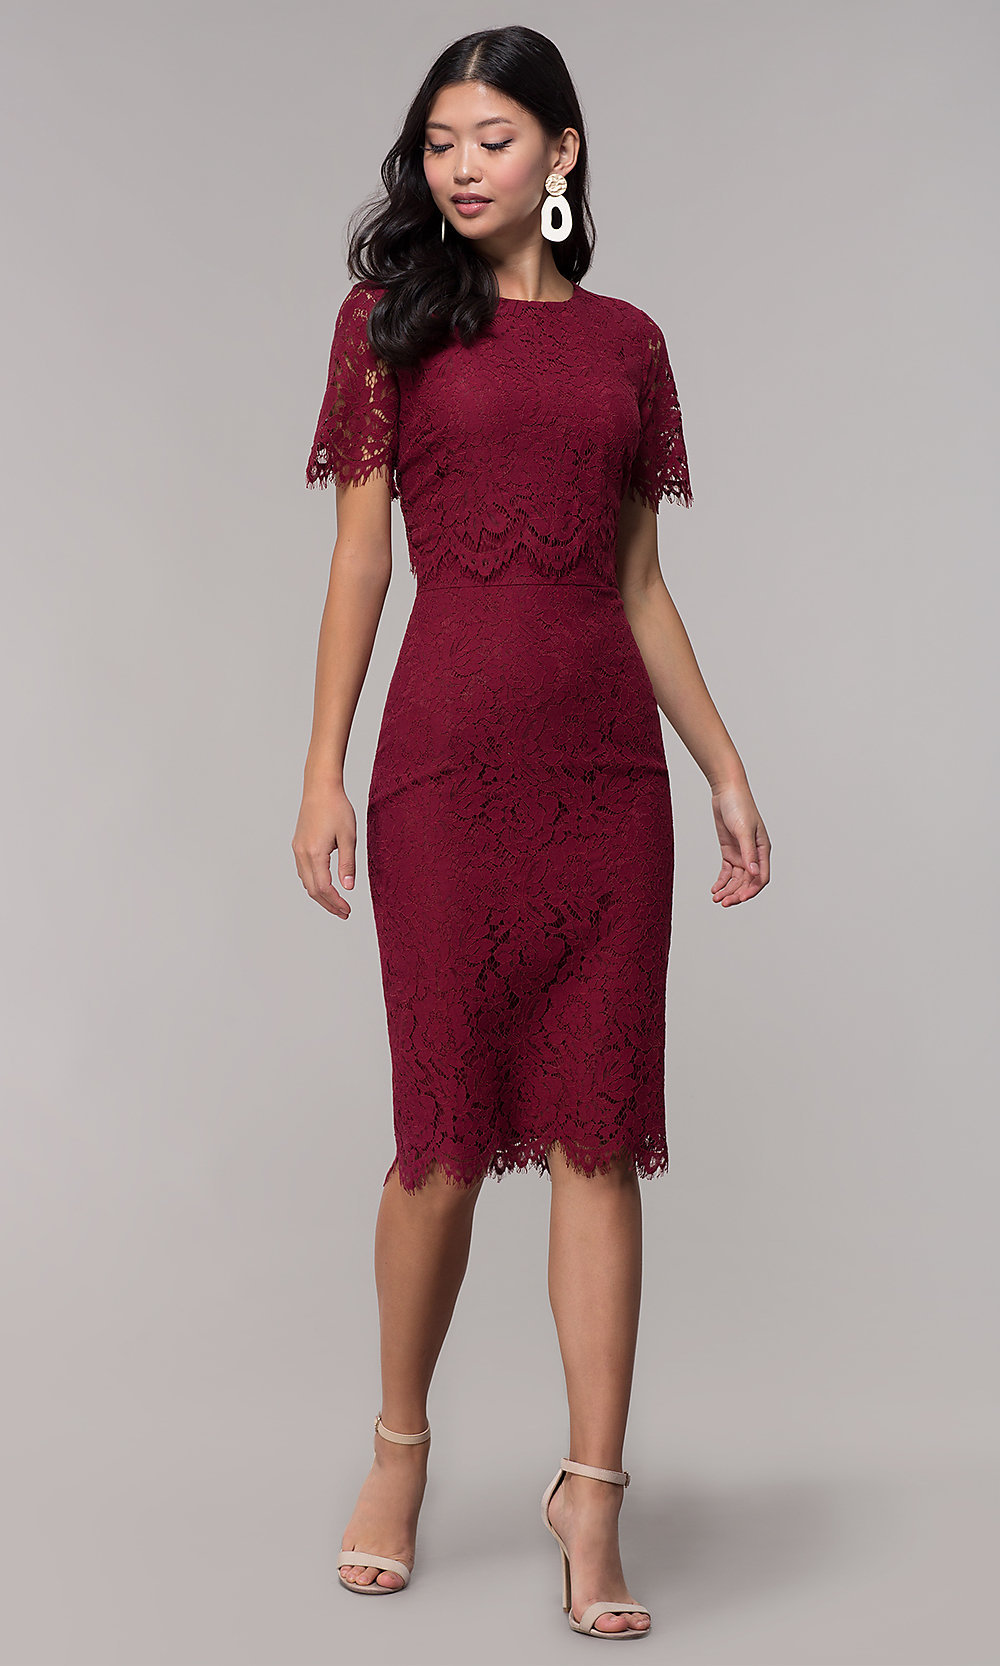 Pretty-Burgundy-semi-formal-lace-dress.-1 60+ Most Fashionable Semi Formal Wedding Dresses for Female Guests